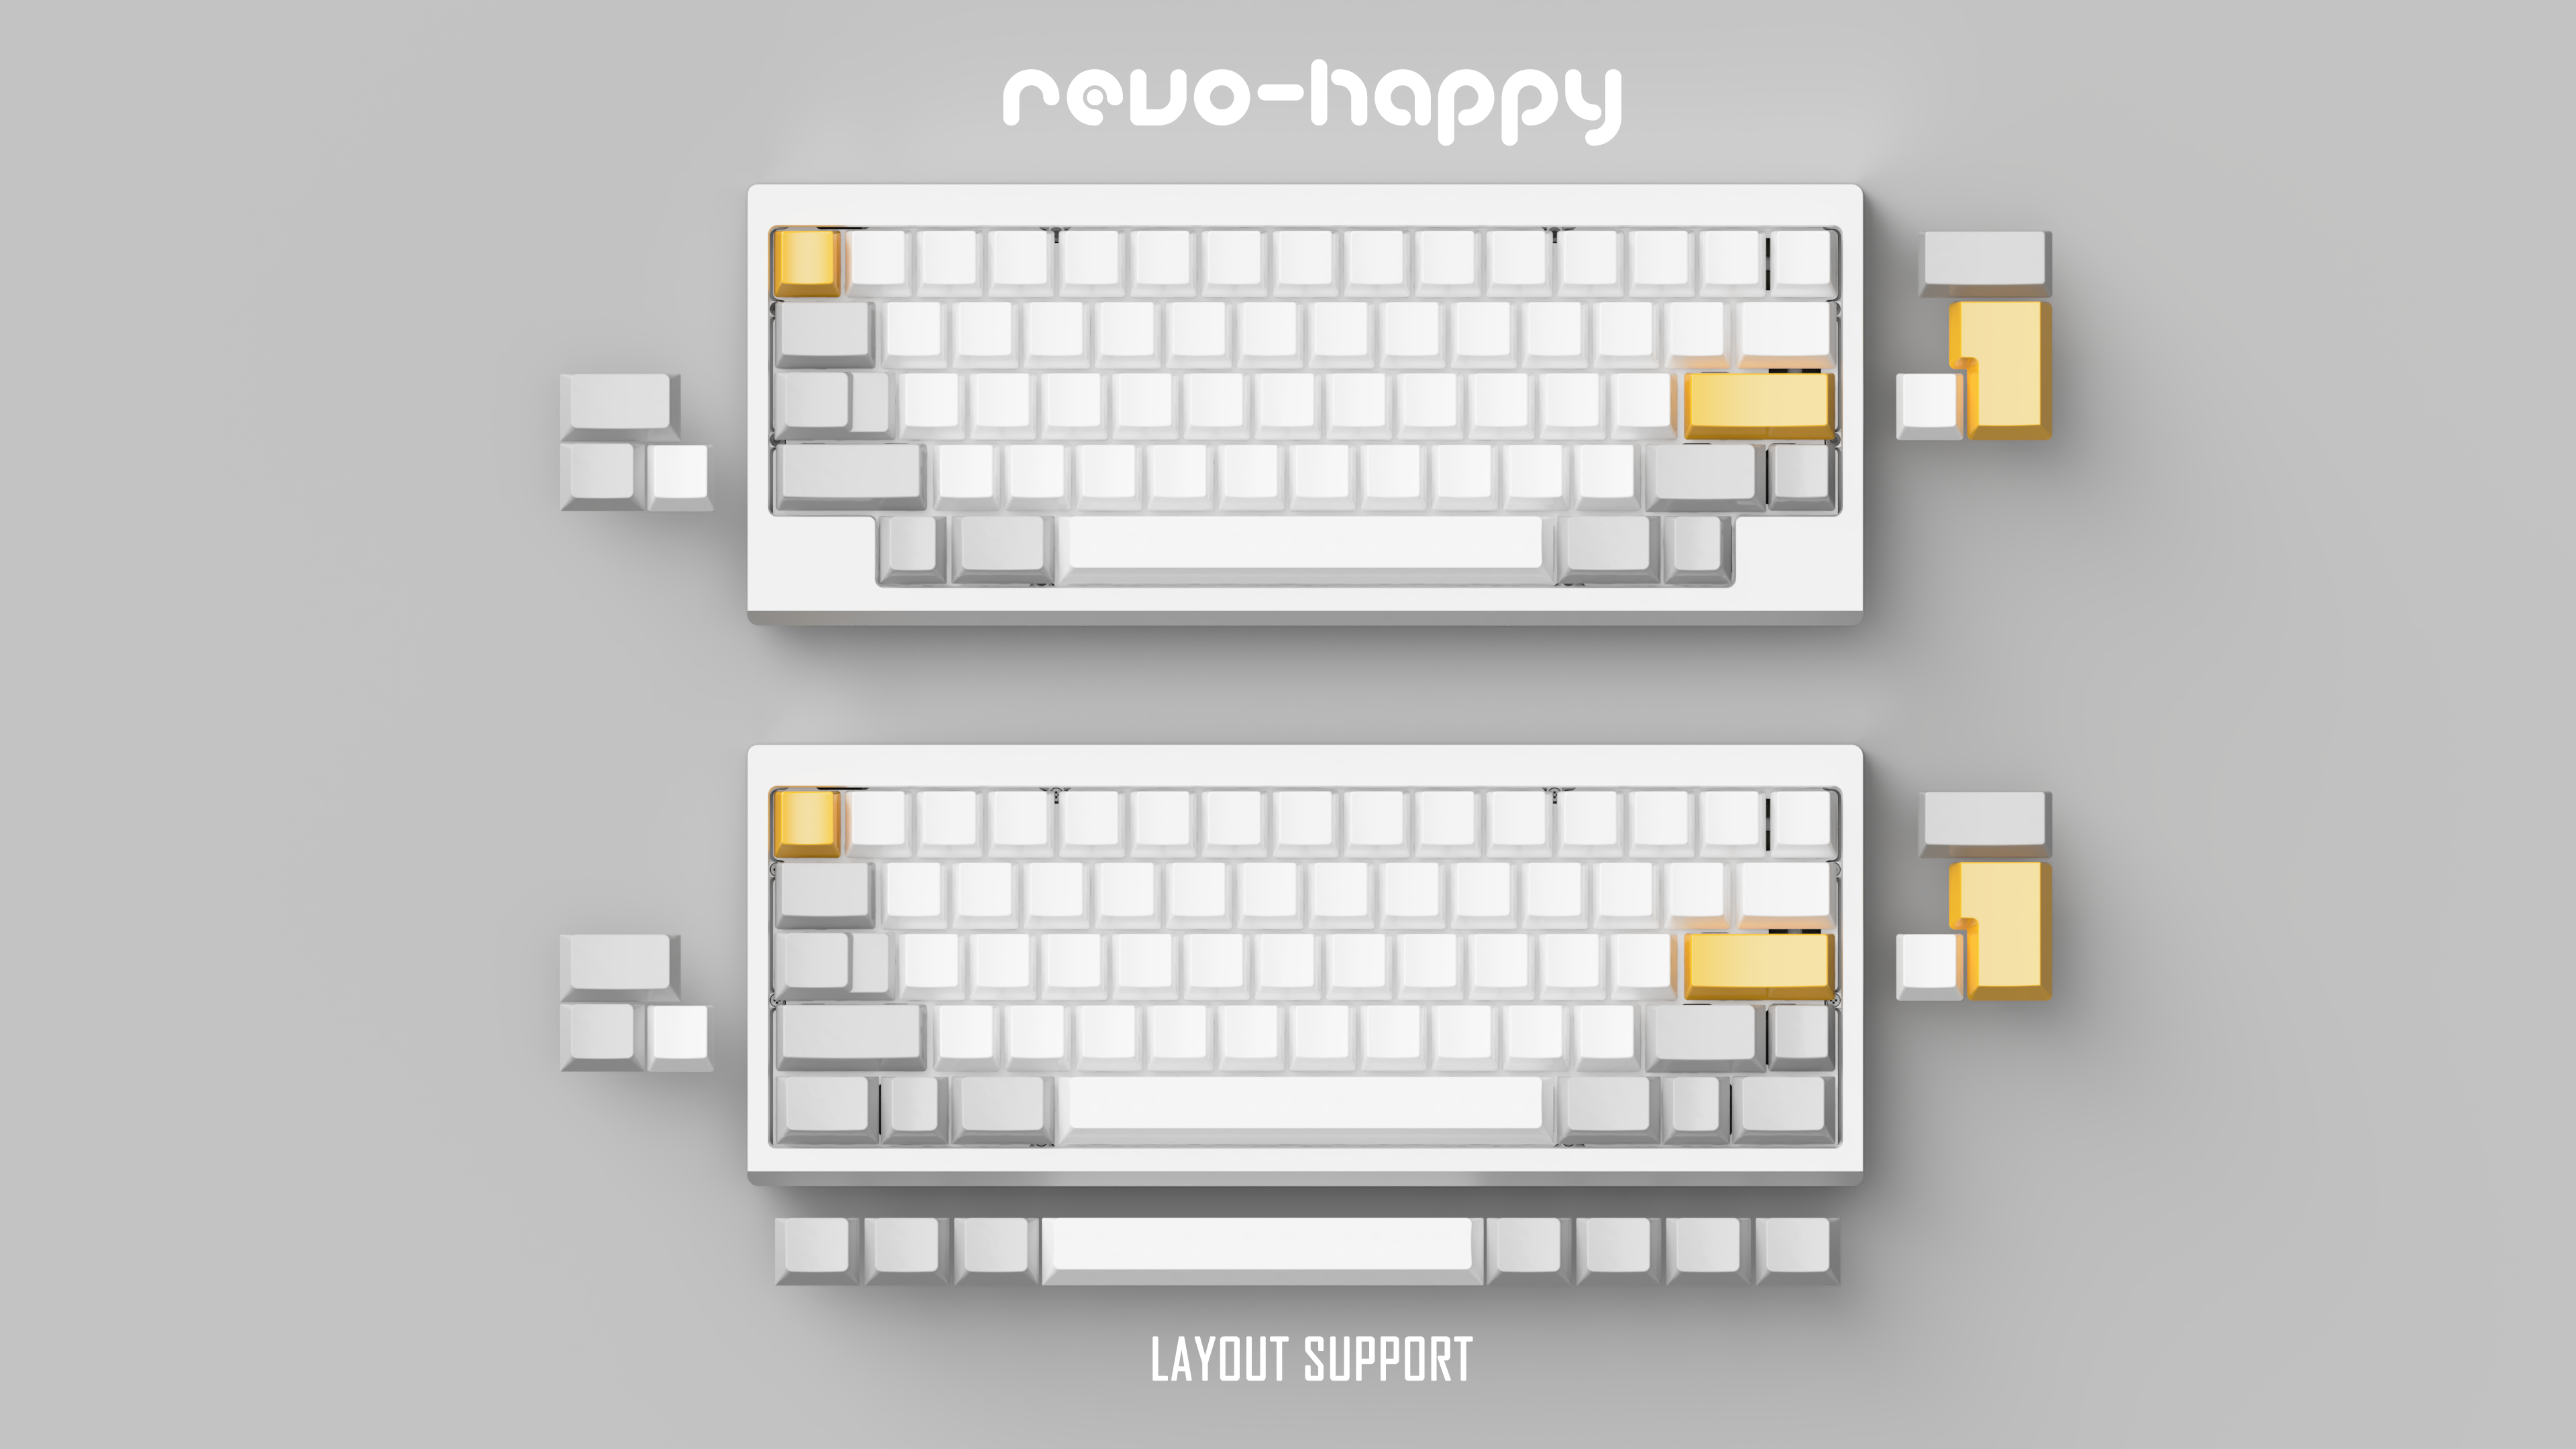 【ZD】客制化机械键盘 Cary Works Revo-happy 60% hhkb 双模套件 - 图0